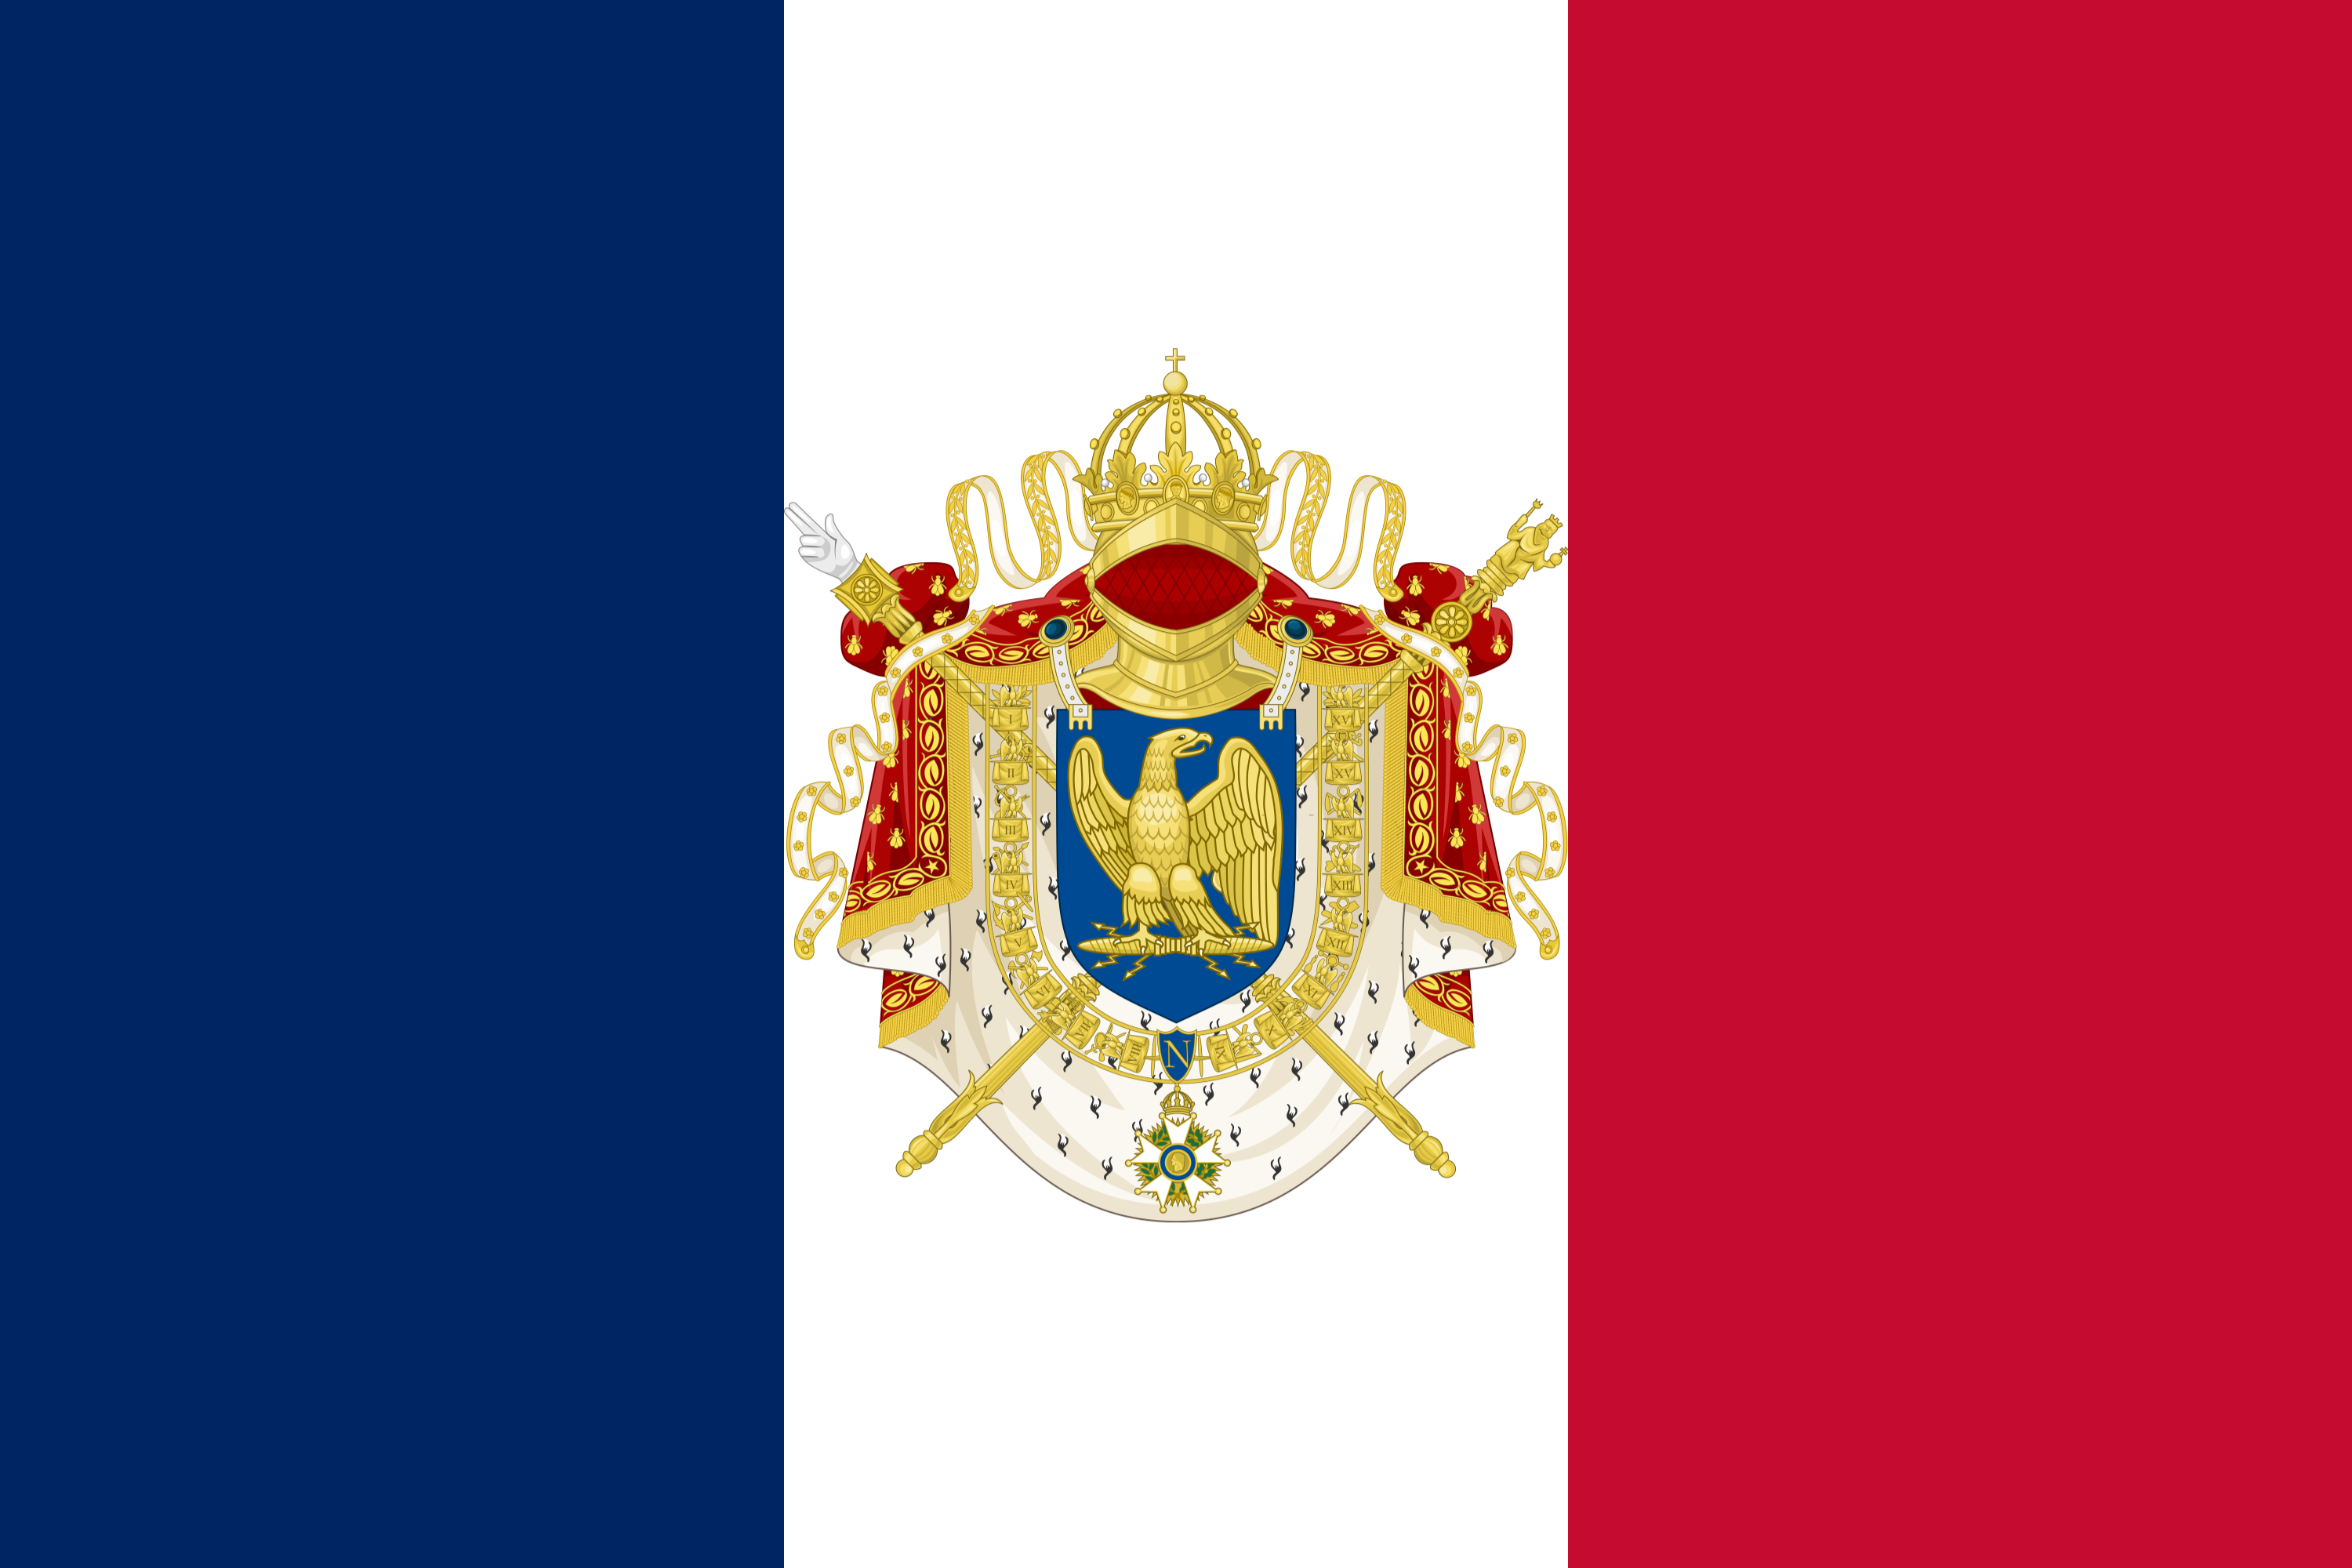 The year of the french. Флаг Франции Наполеона 1. Флаг французской империи 1812. Флаг наполеоновской Франции 1812. Флаг Франции 19 века при Наполеоне.